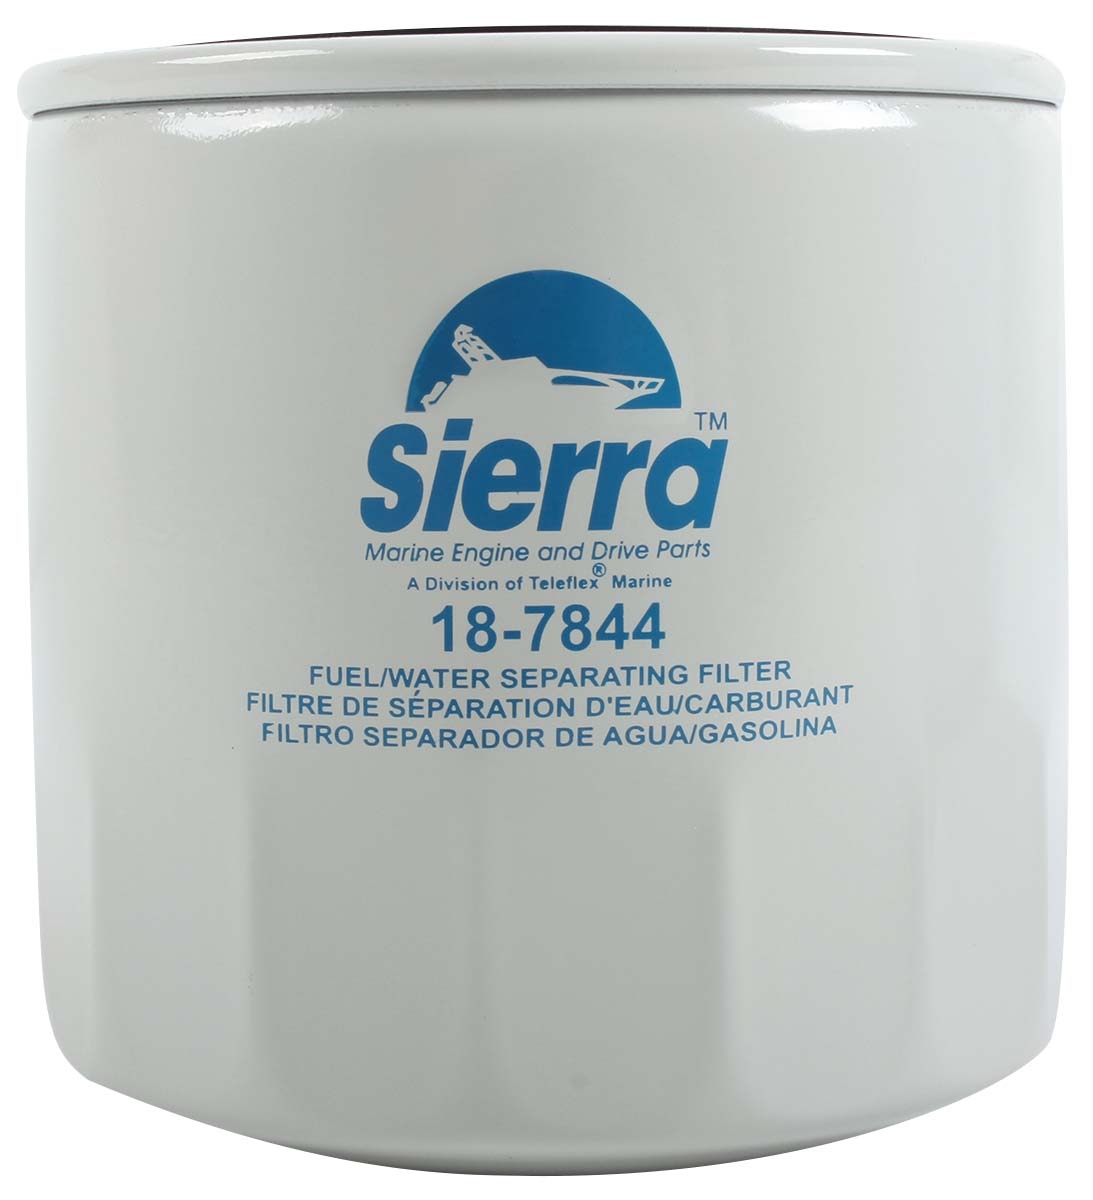 Sierra Marine Fuel/Water Separating Filter 21 Micron 90GPH 18-7844 